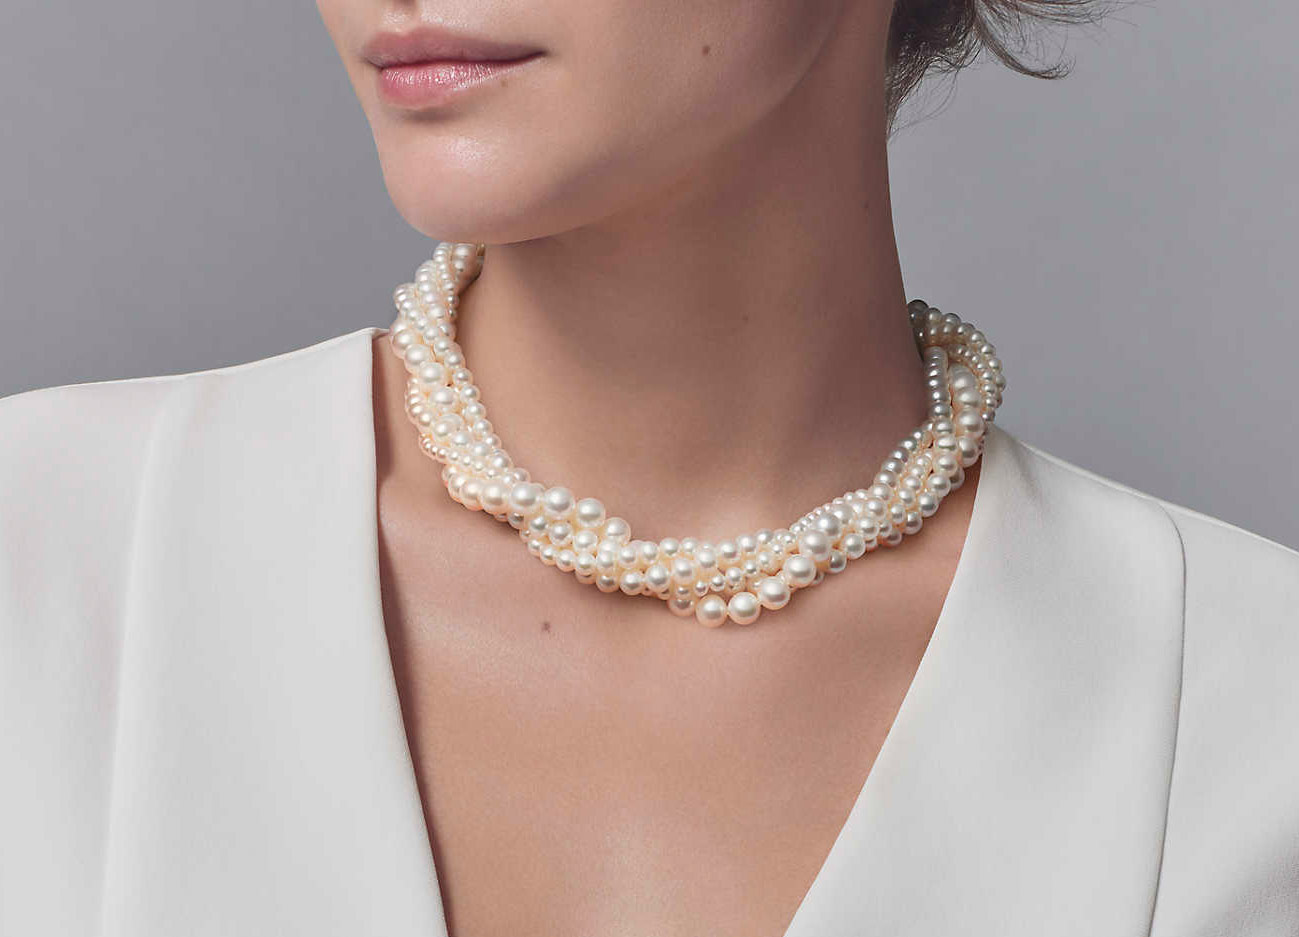 Jewelry style: 10 kinds of neck jewelry